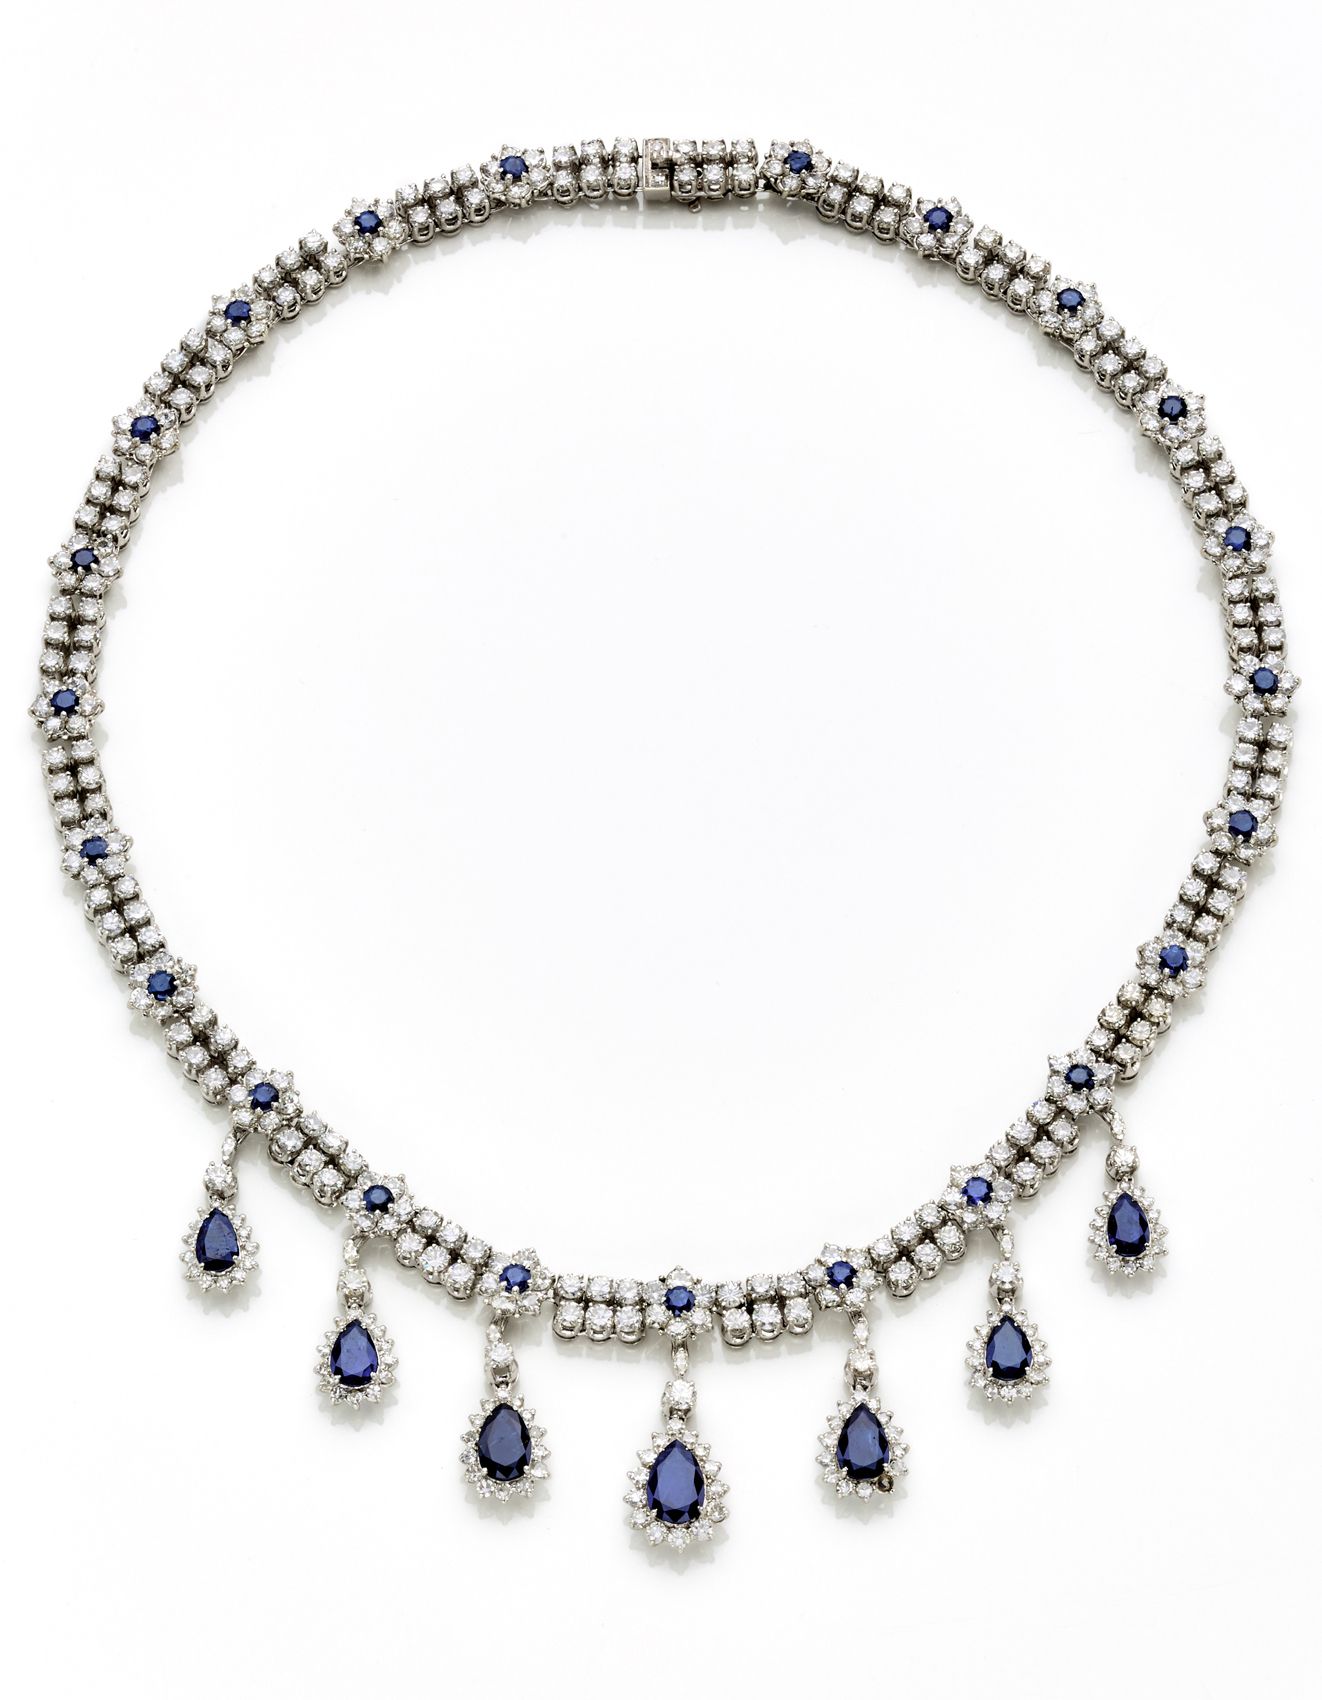 Null 白金钻石项链，镶有圆形和梨形蓝宝石，钻石均为25.00克拉，梨形蓝宝石均为7.65克拉，克重64.25克拉，长度43.20厘米。(损失)

IT
Co&hellip;